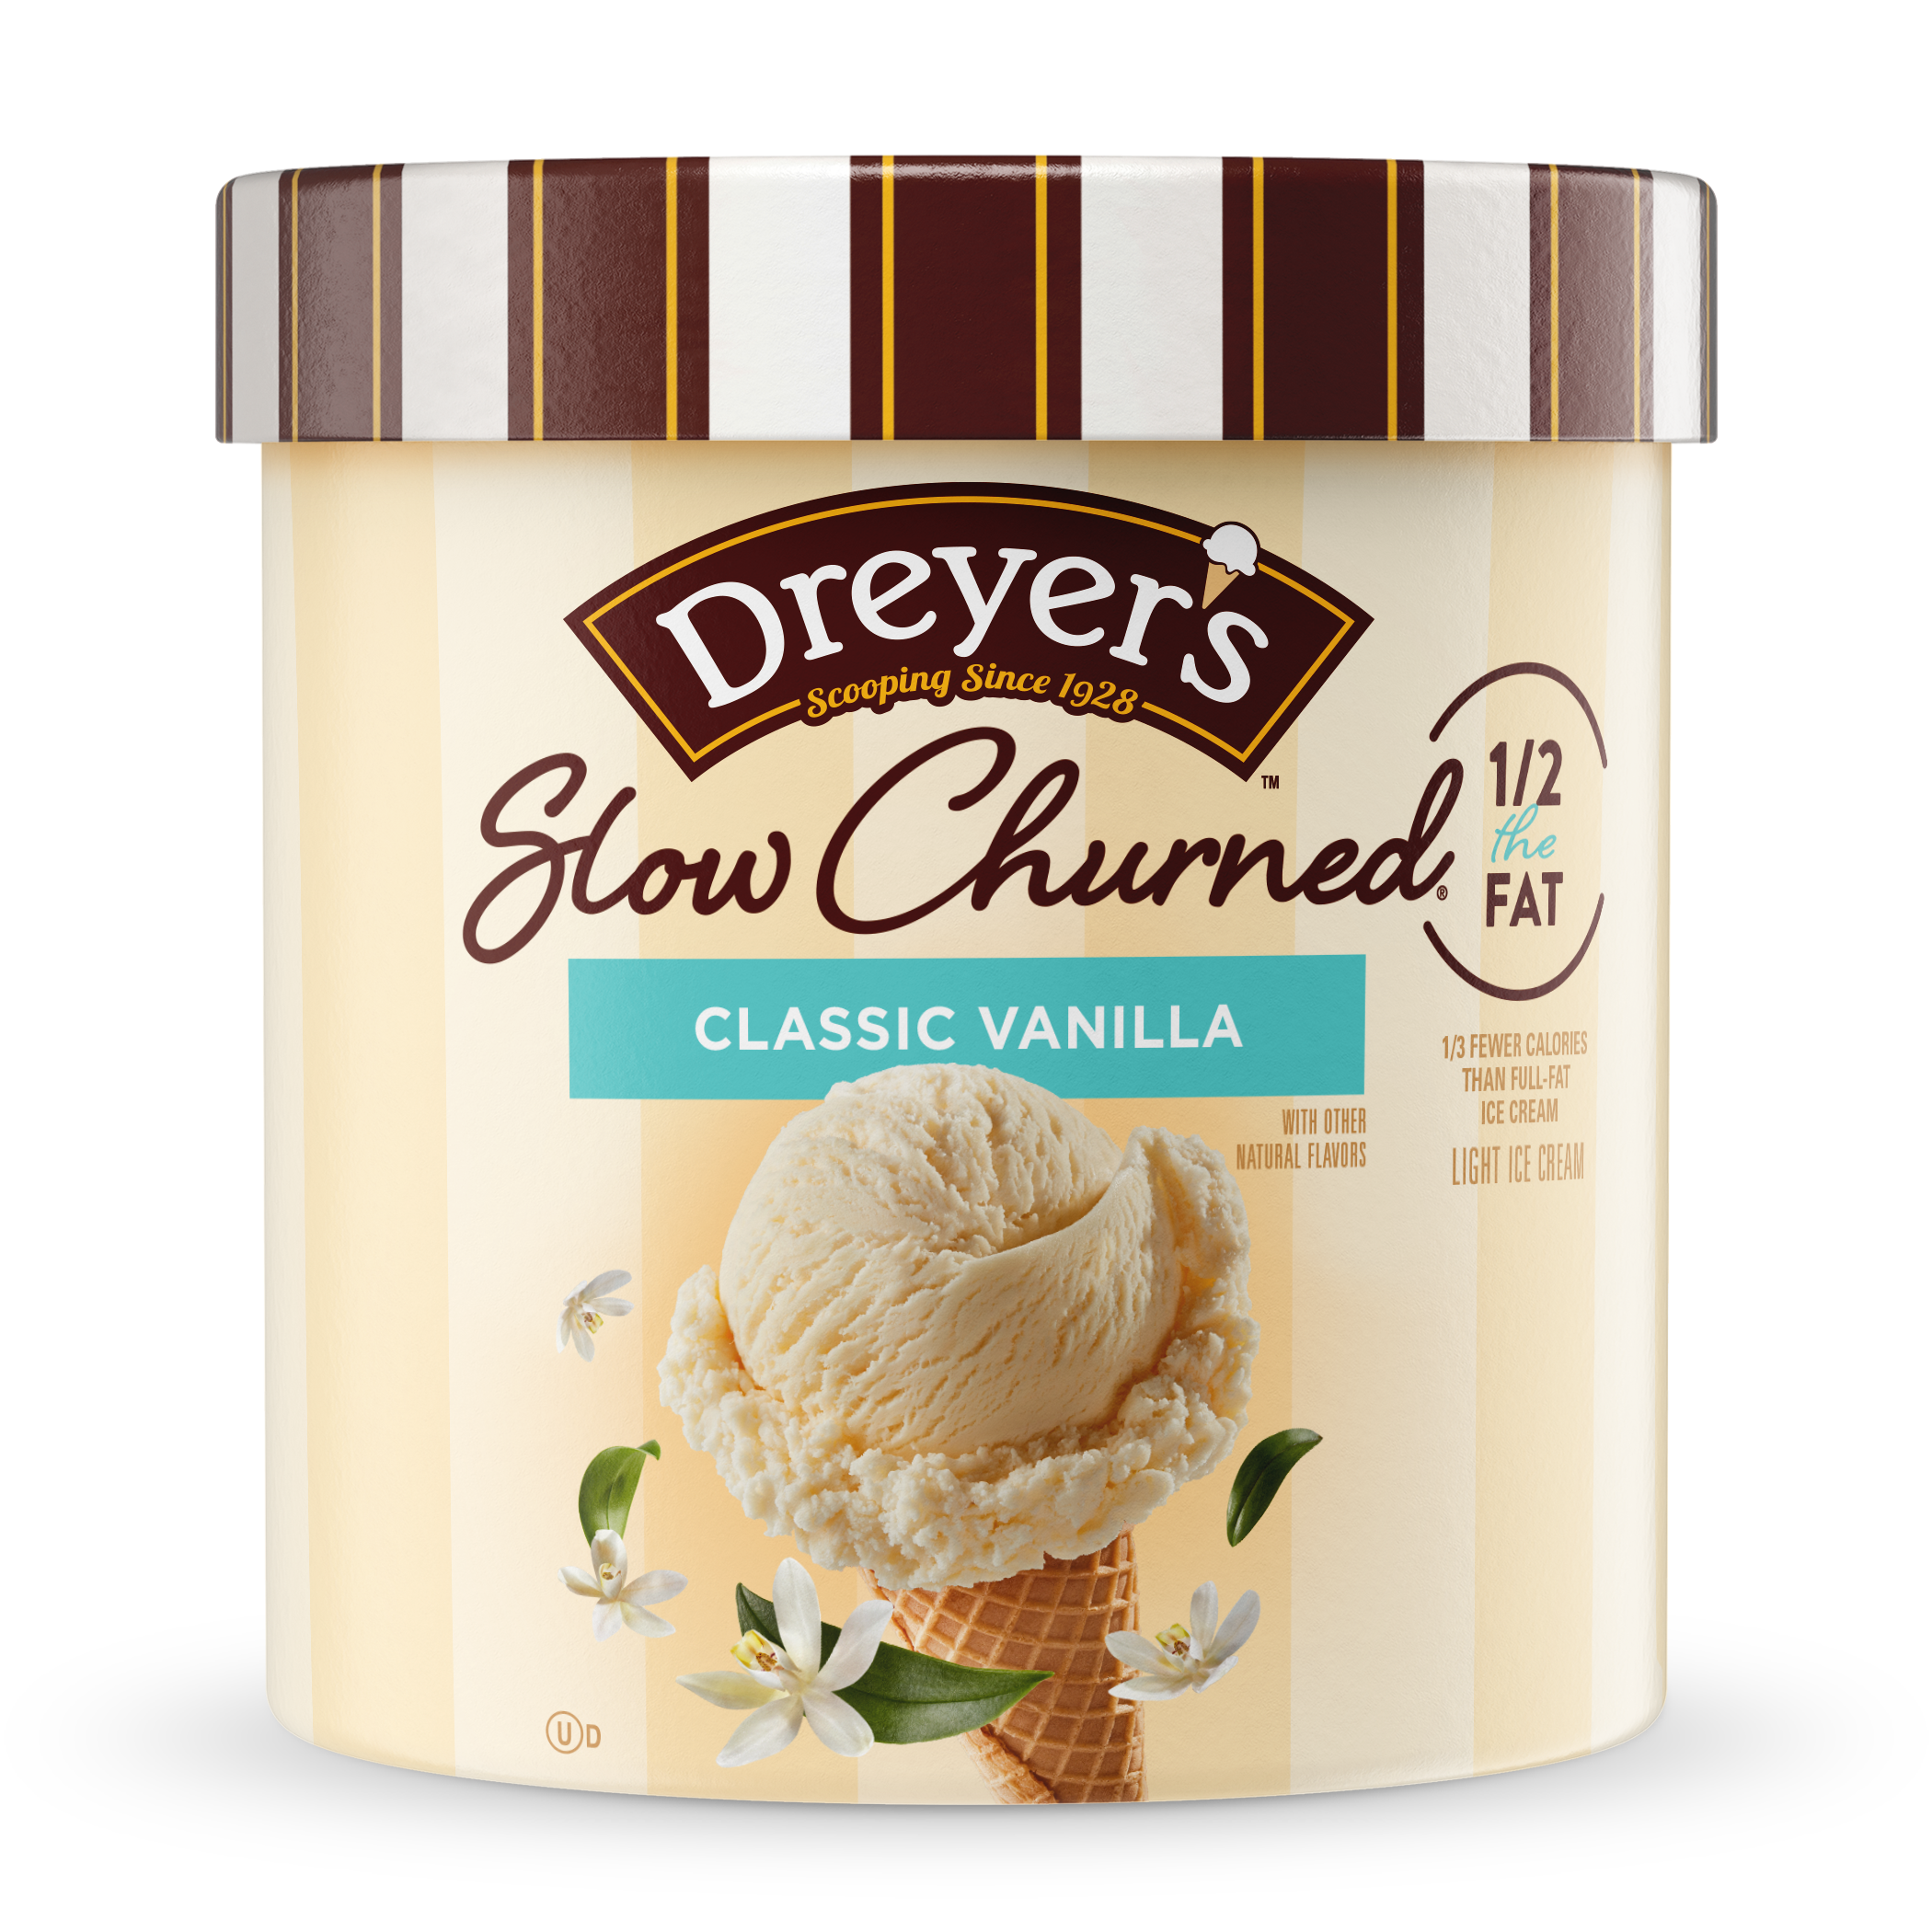 Carton of Dreyer's slow-churned classic vanilla ice cream